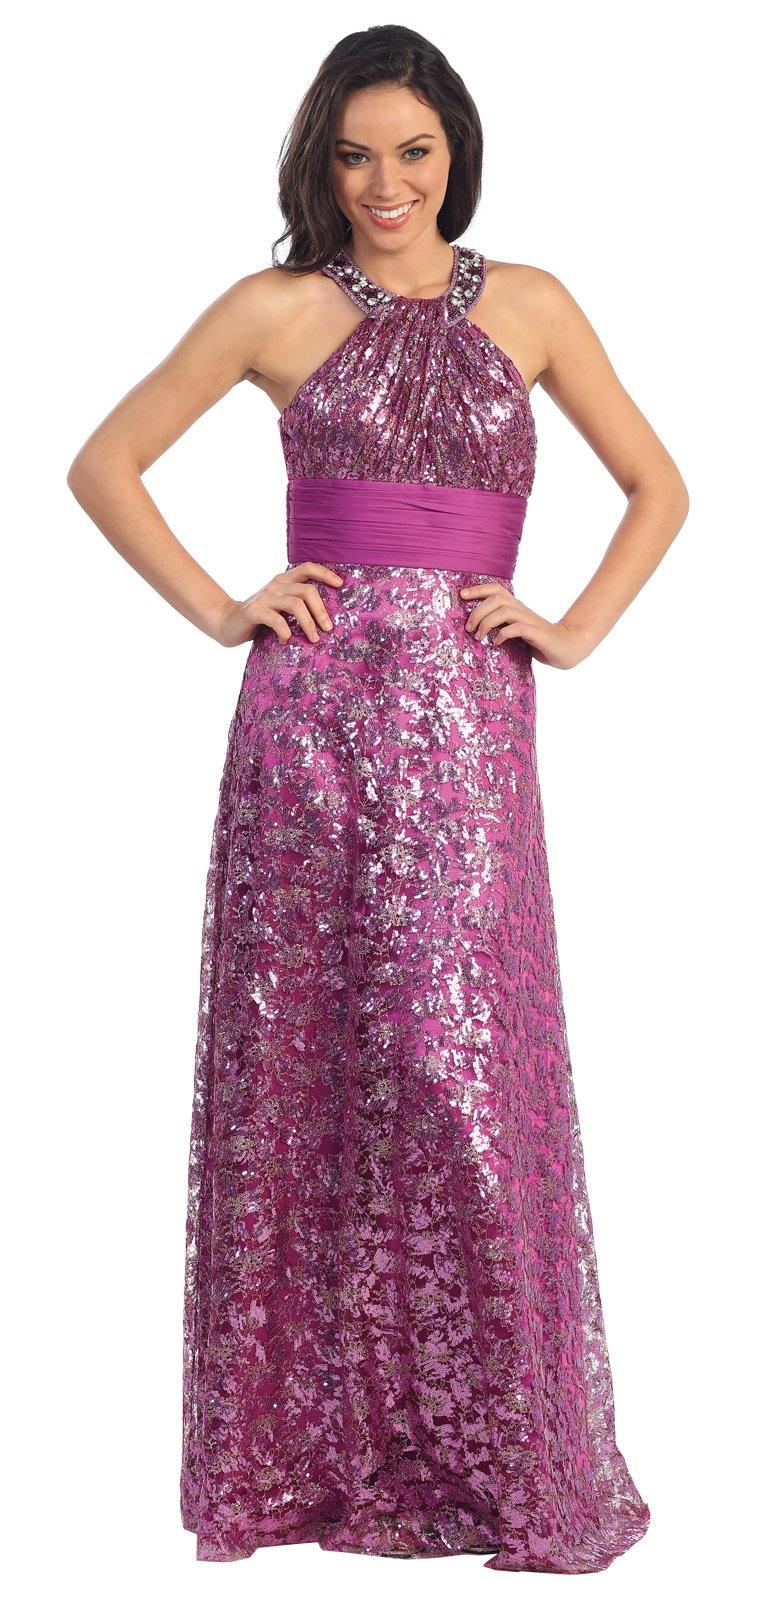 Long Lace Prom Dress Evening Gown - The Dress Outlet Elizabeth K